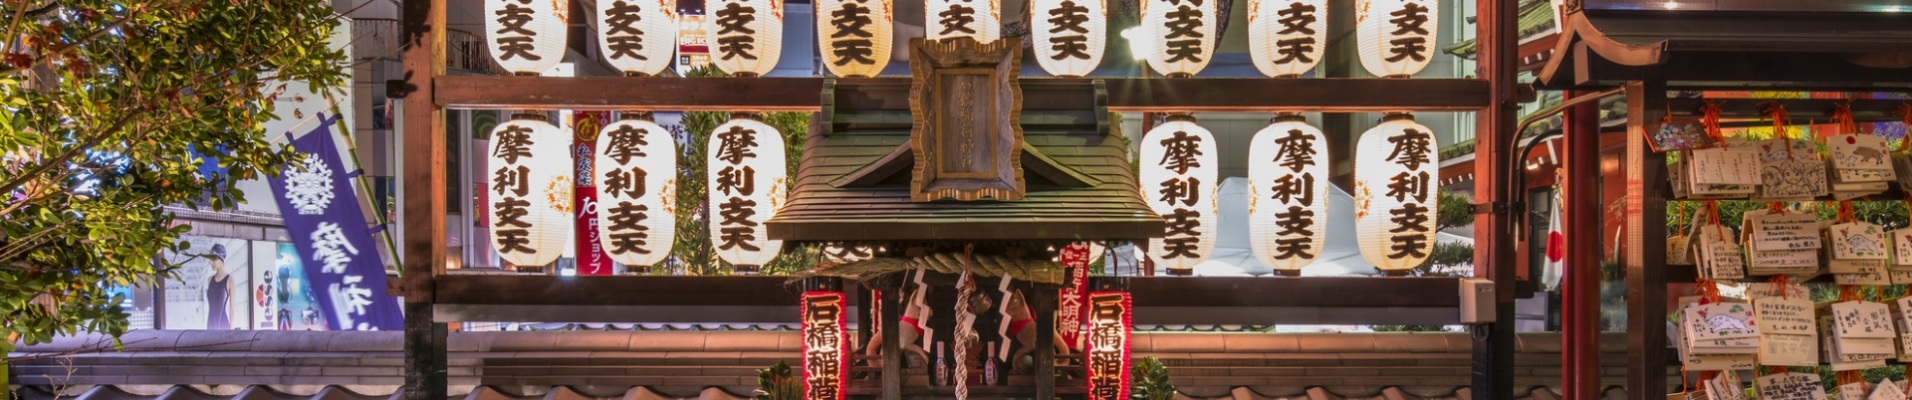 Temple Shinto Ishibashi Inari, Tokyo